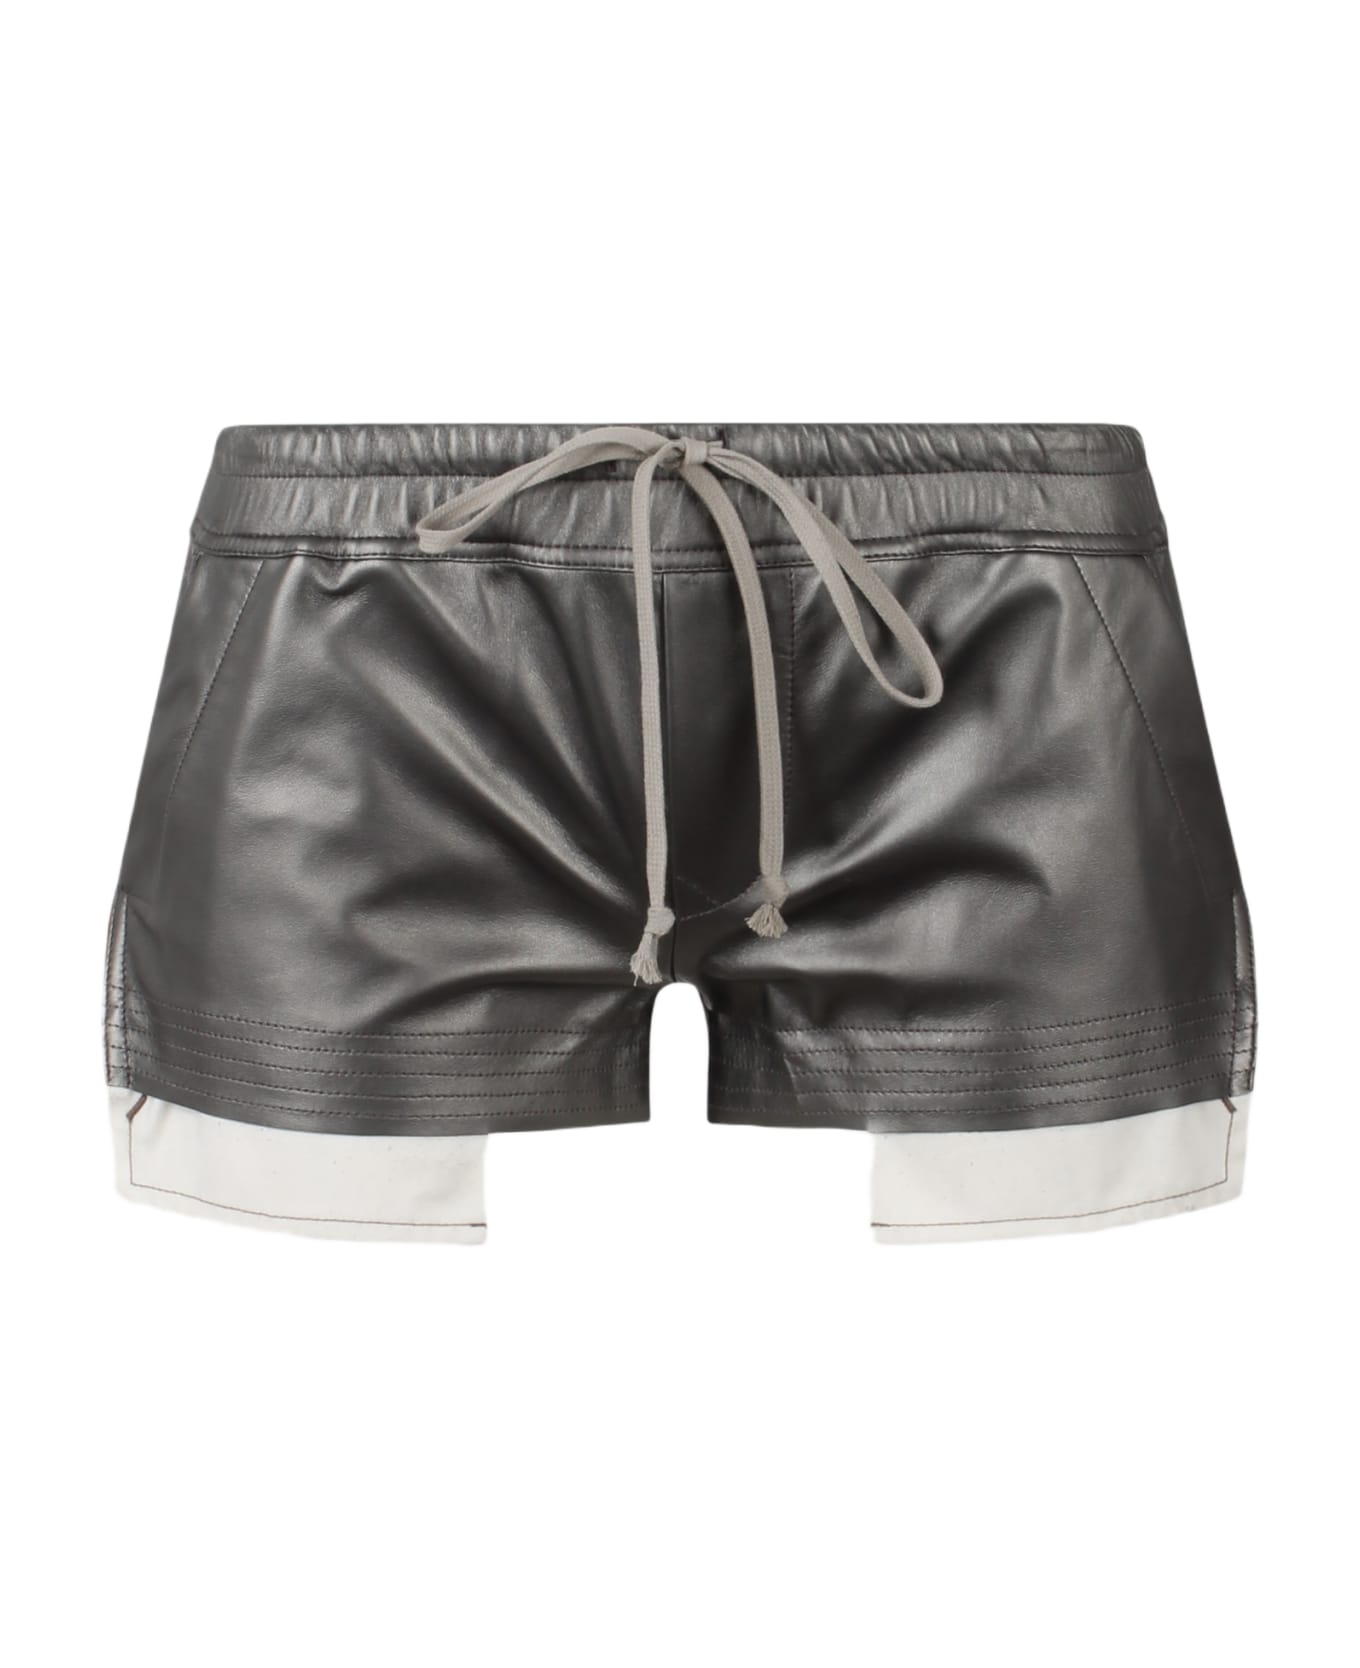 Rick Owens Fog Boxers Shorts - Metallic